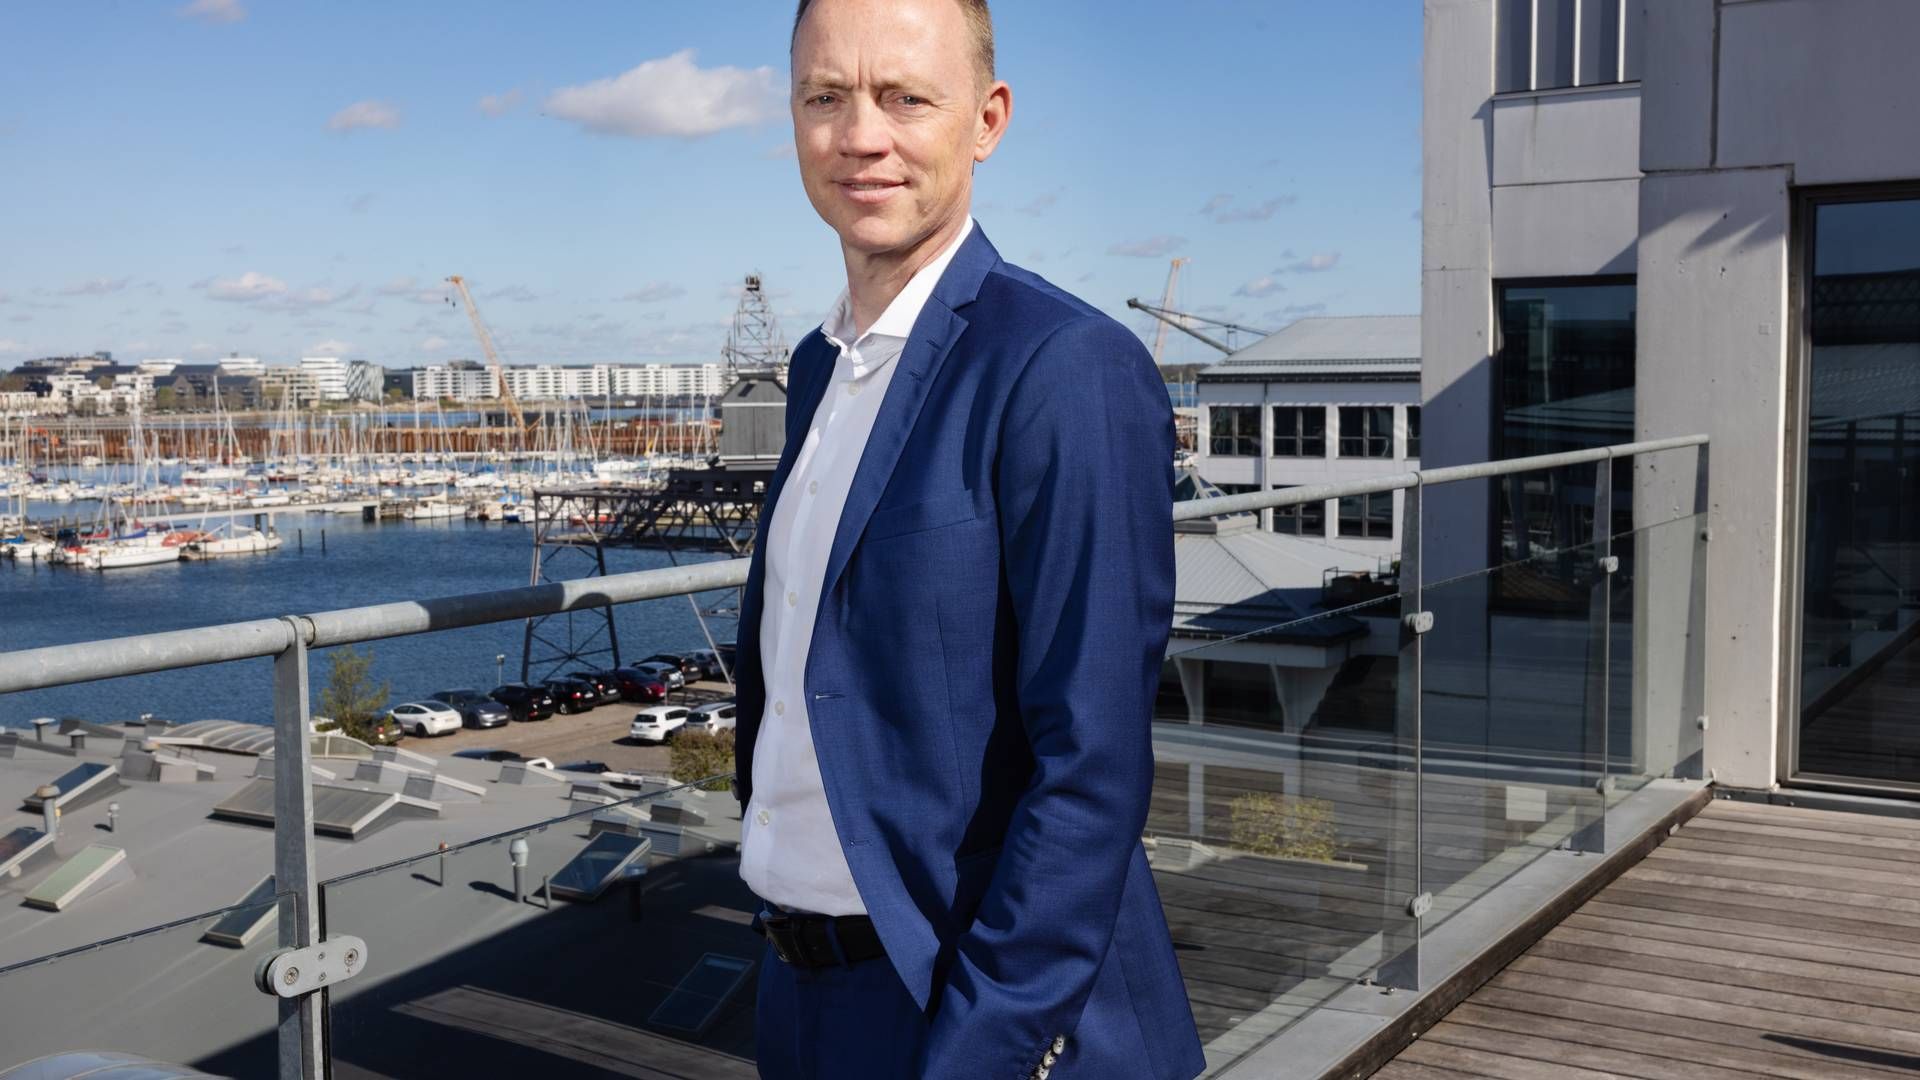 Kasper Nilaus er adm. direktør i Svitzer. | Foto: Gregers Tycho